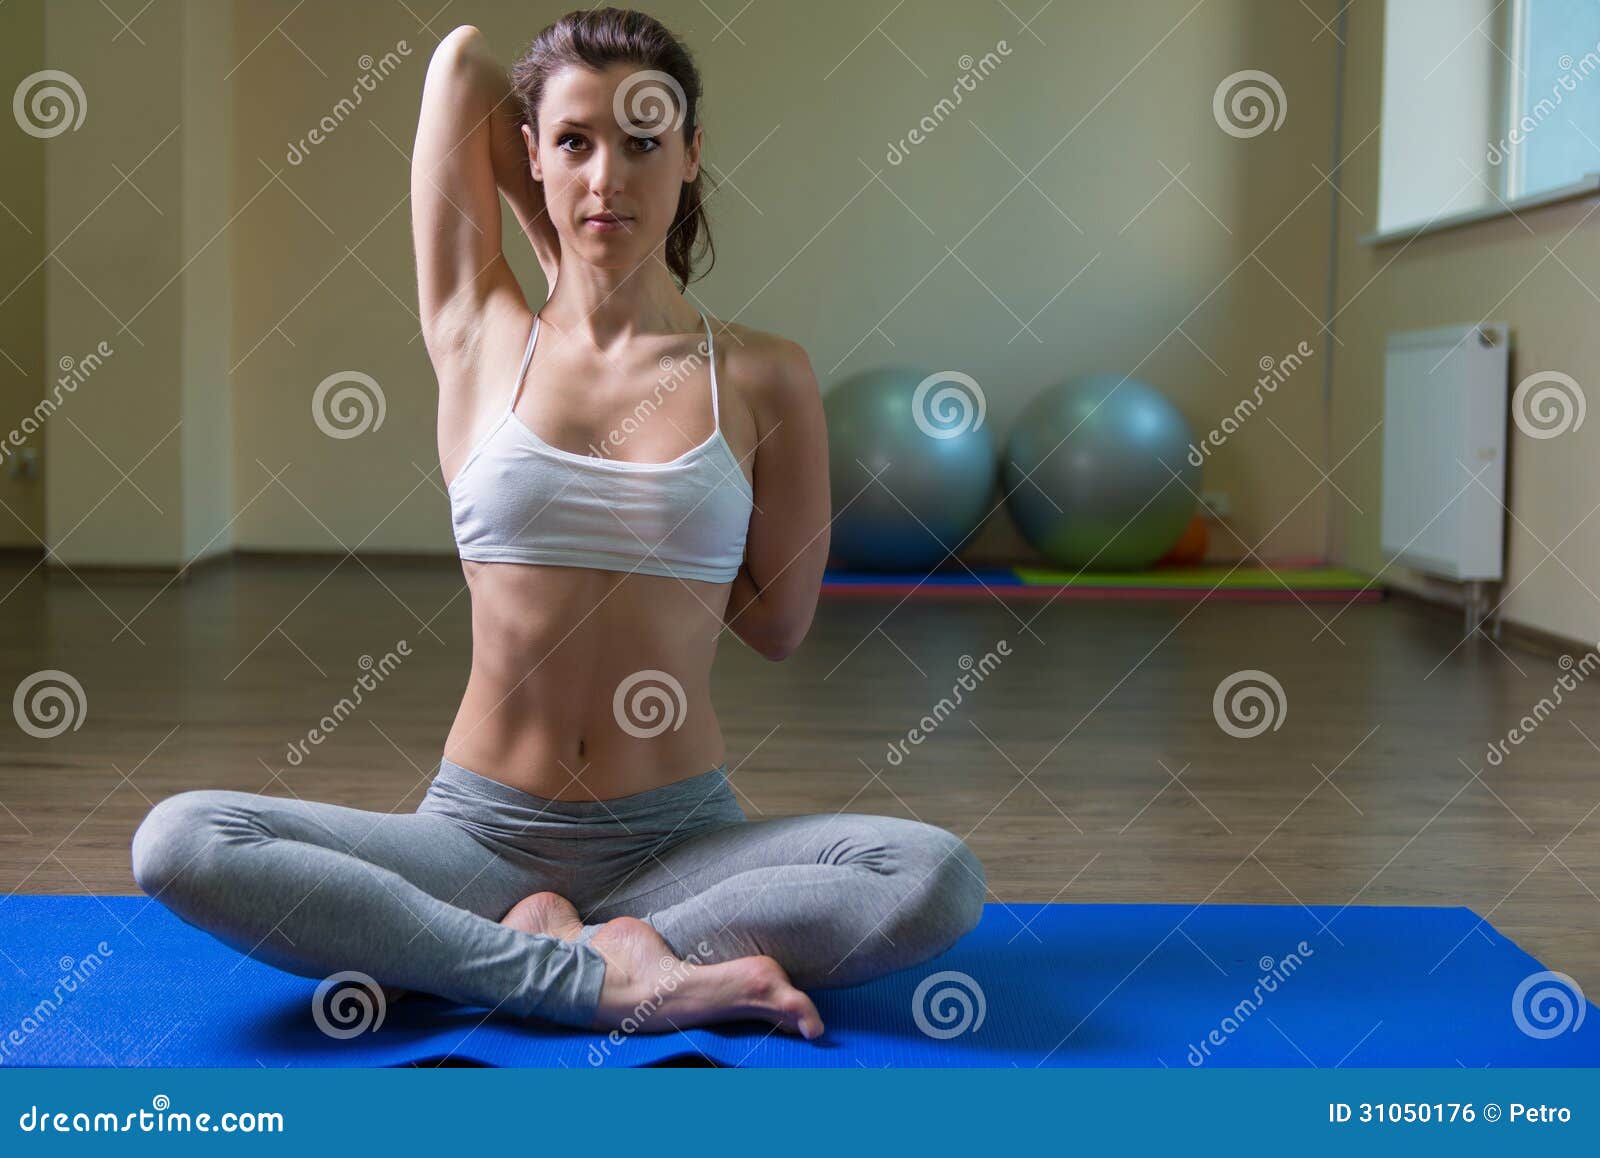 young woman training in yoga asana